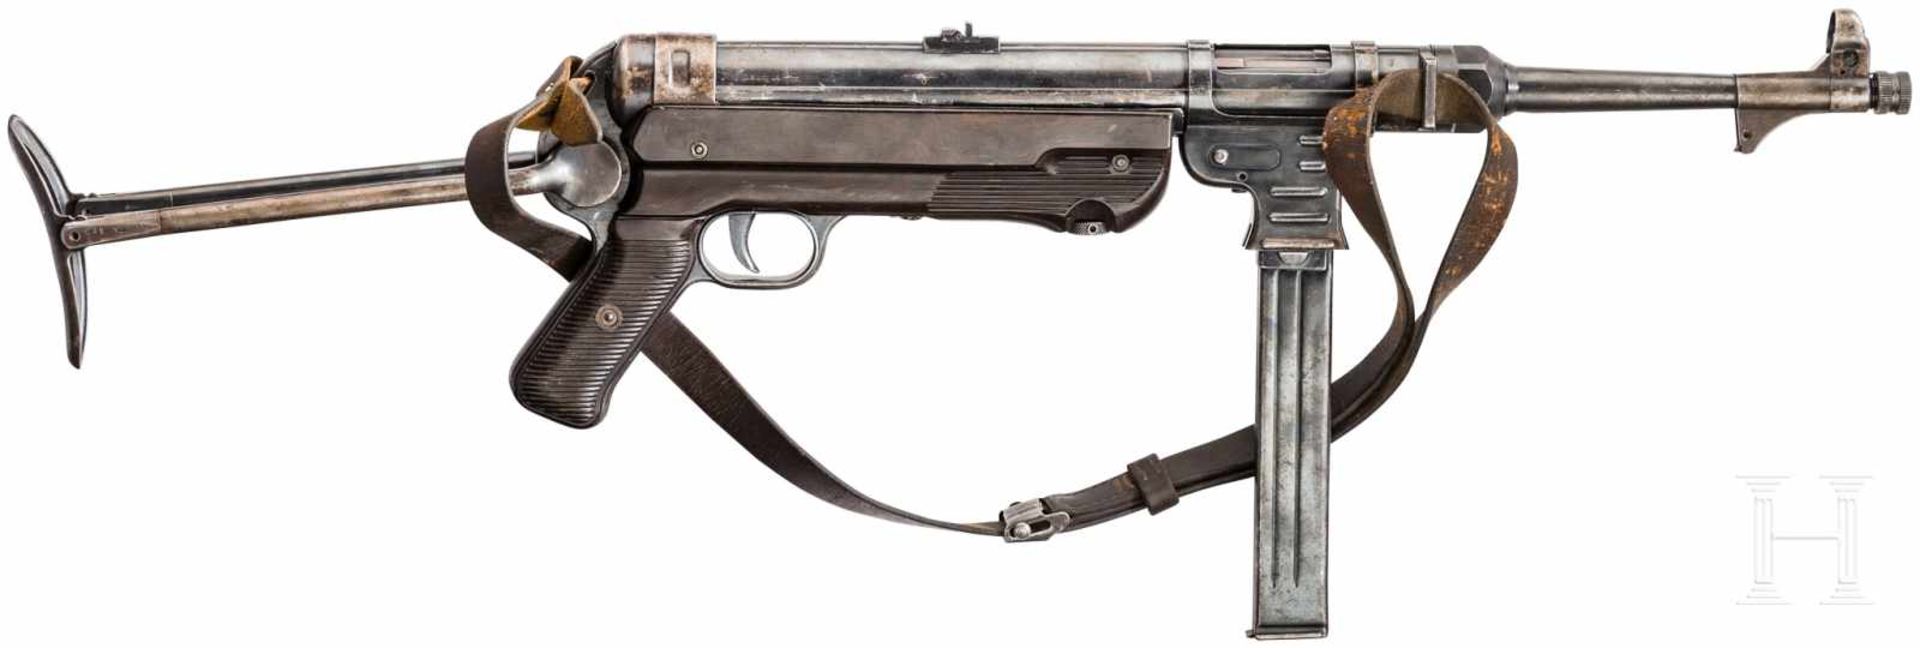 Originale Maschinenpistole Mod. 40 ("MP 40"), Code "660 - 40"Kal. 9 mm Luger, Nr. 3323d / 9183f,